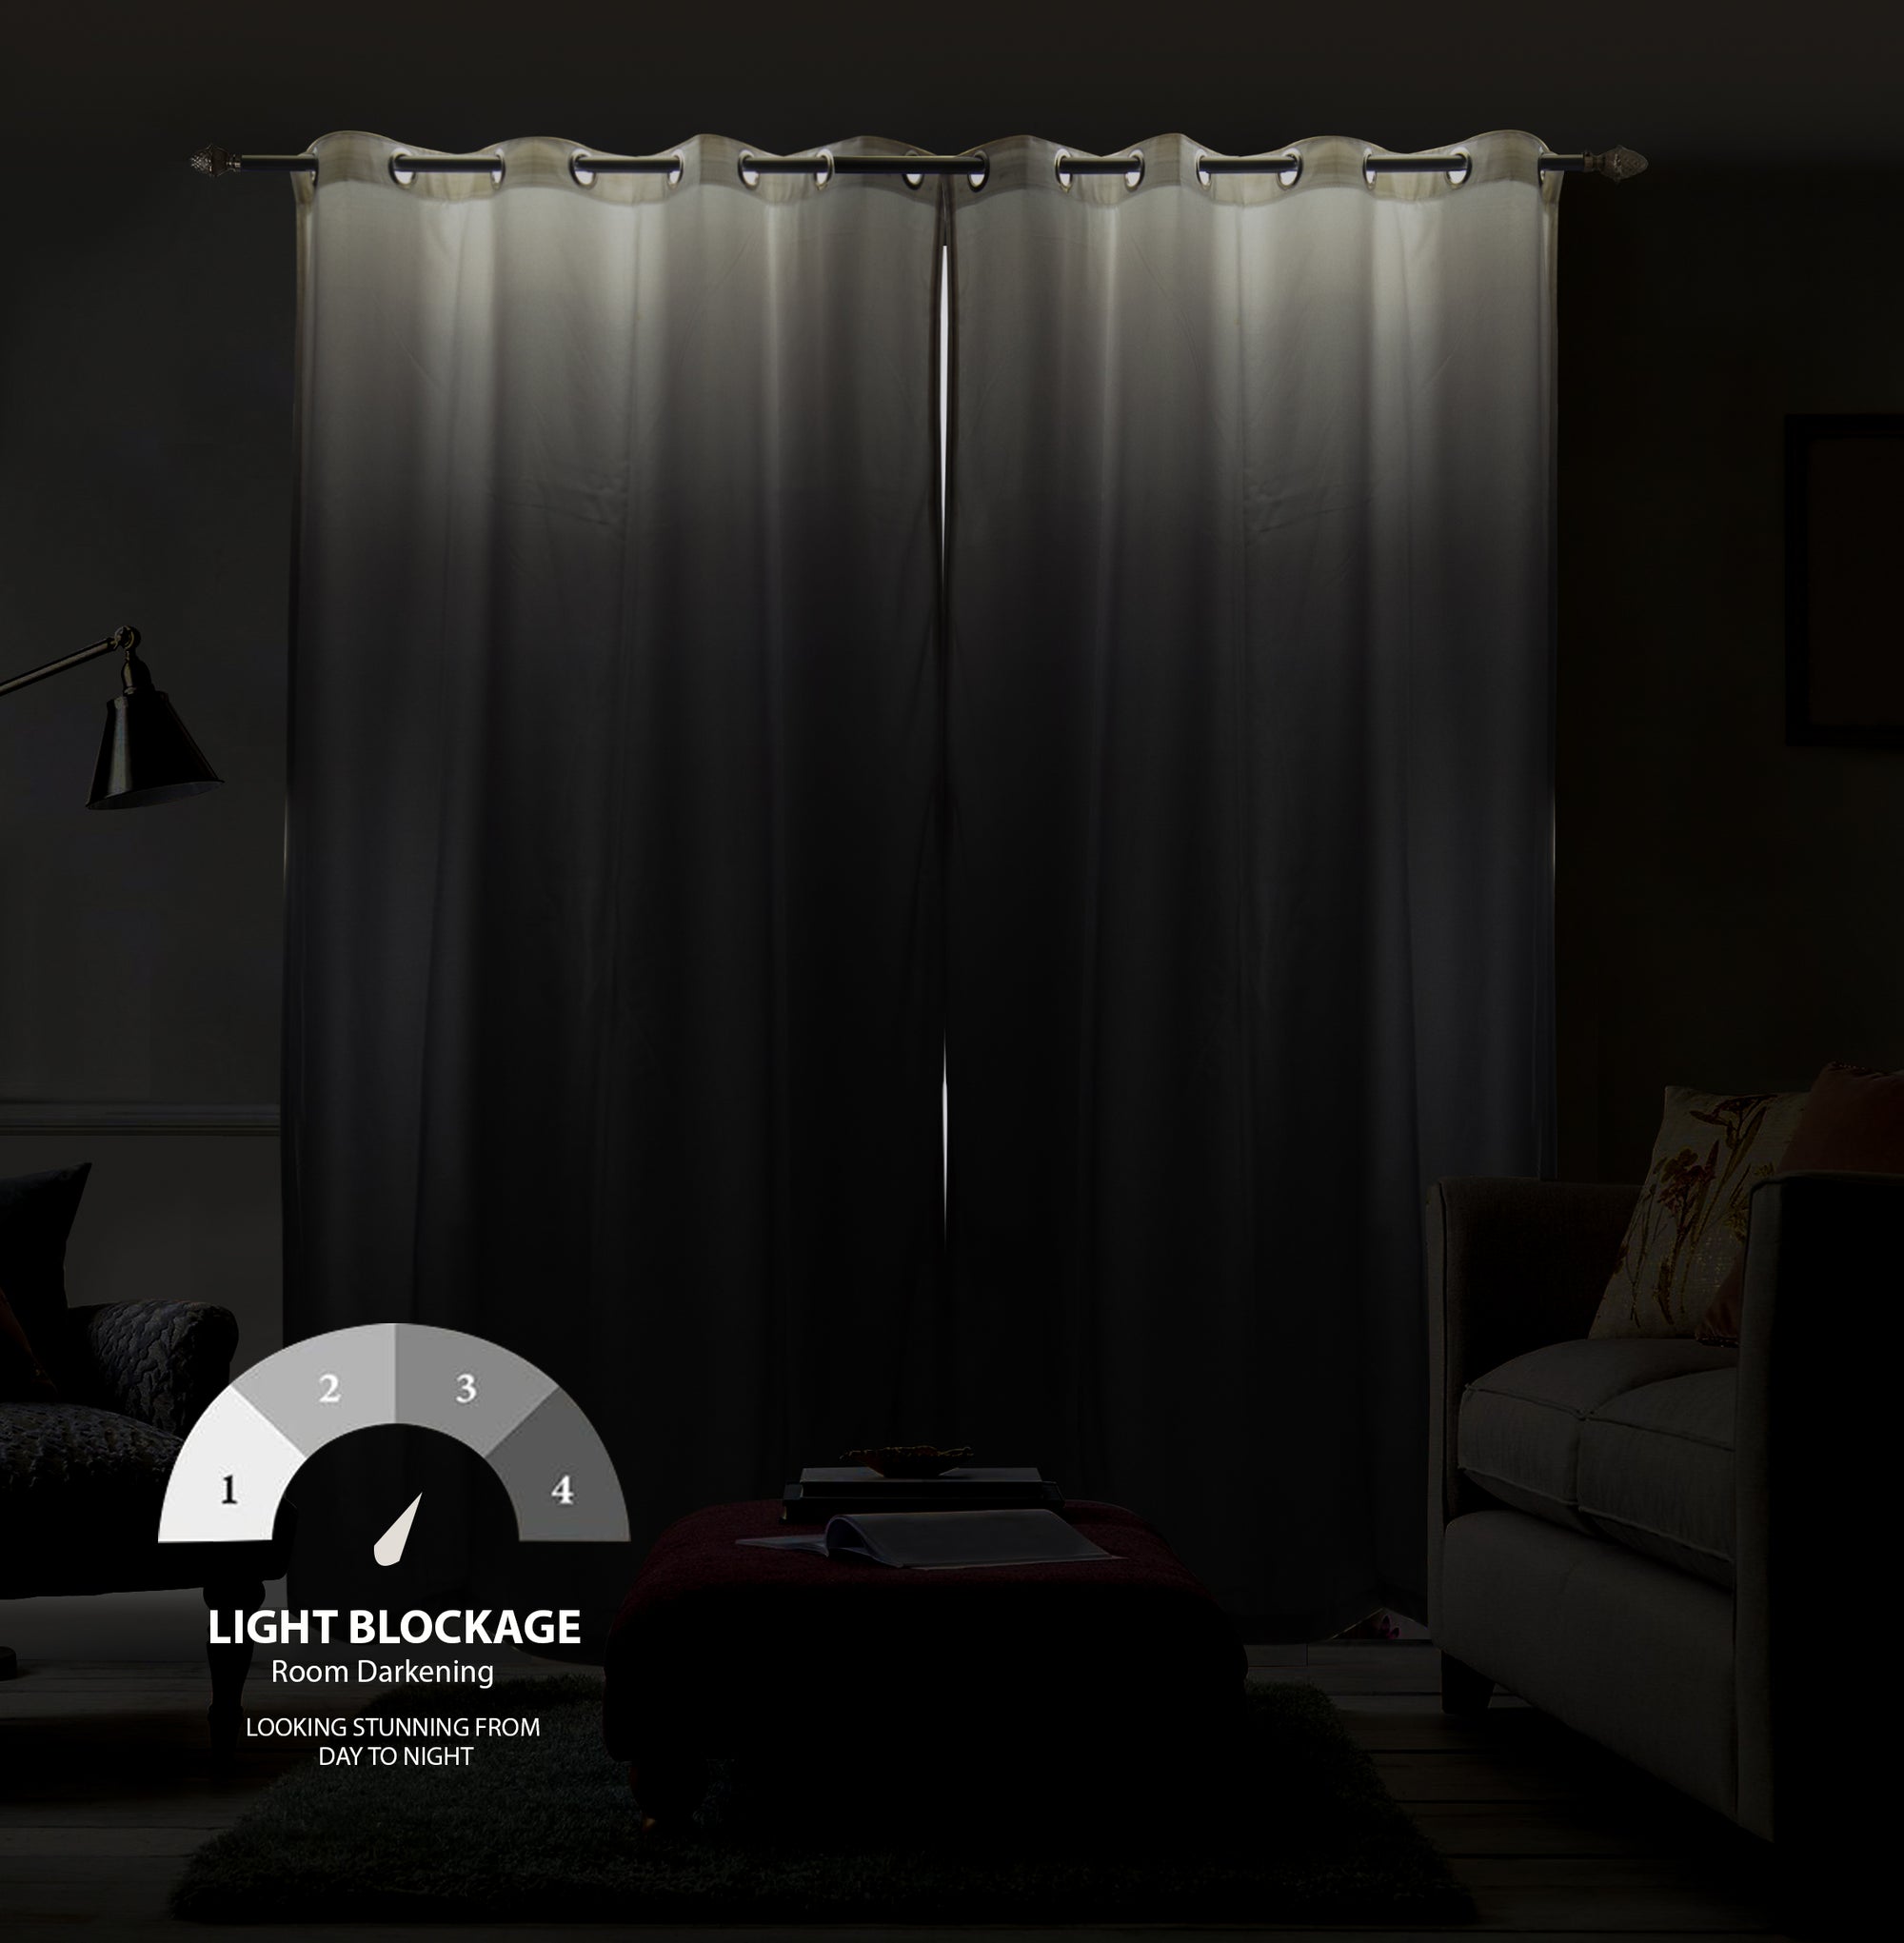 Printed Luxury Design& Curtain styles Ready Made Velvet Curtains